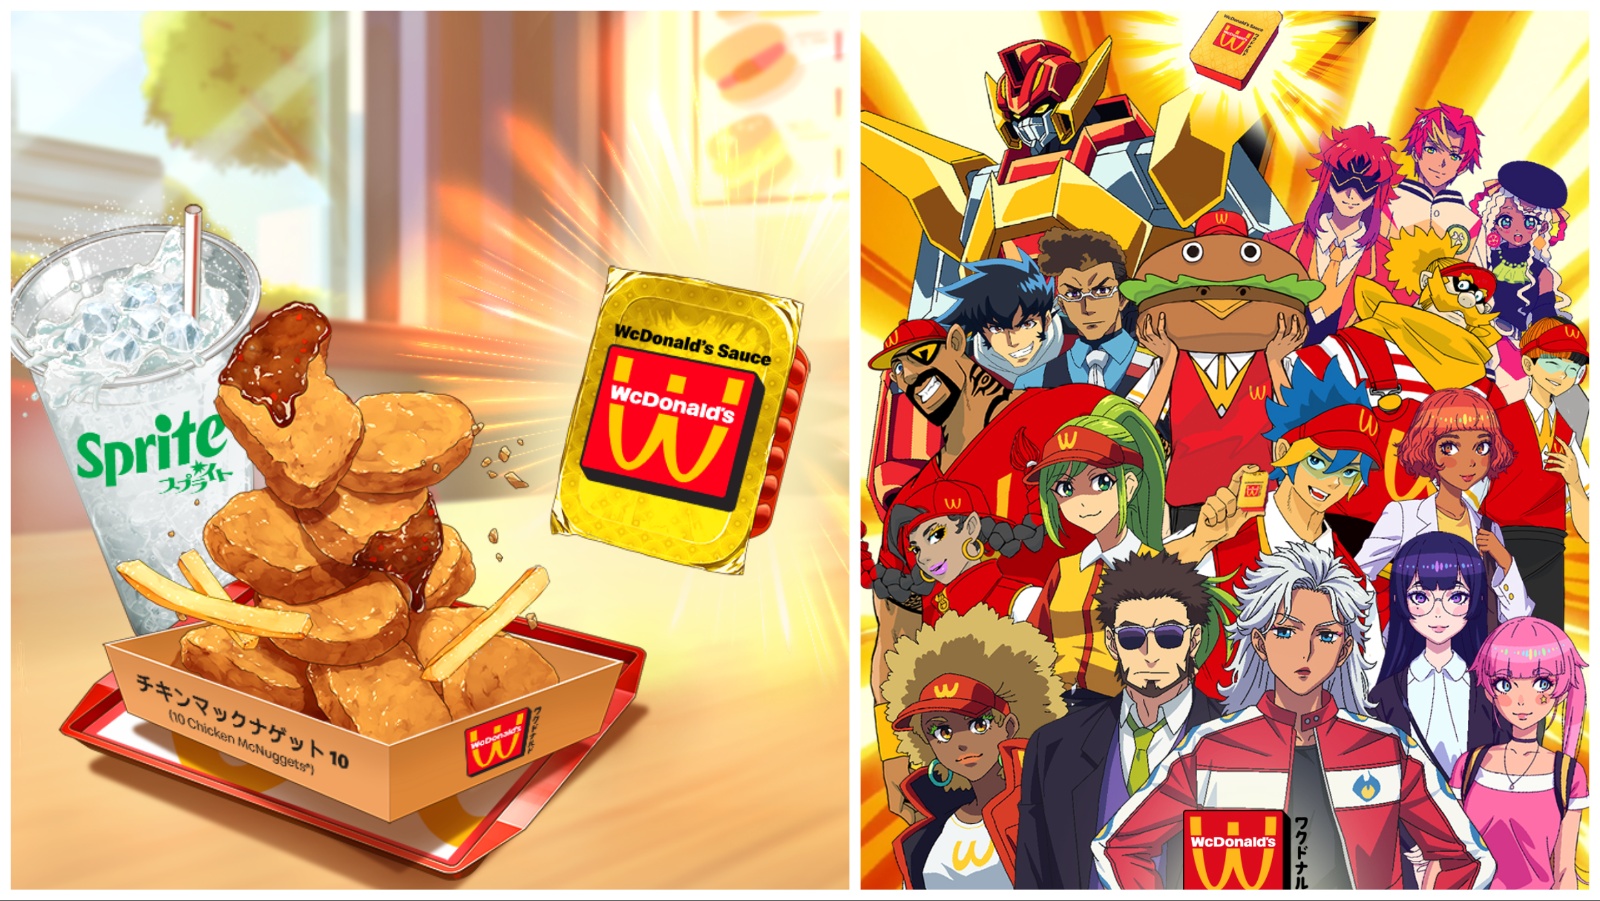 Dobro došli u Vekdonalds (WcDonald's): McDonald's oživljava omiljeni fiktivni restoran ljubitelja animea